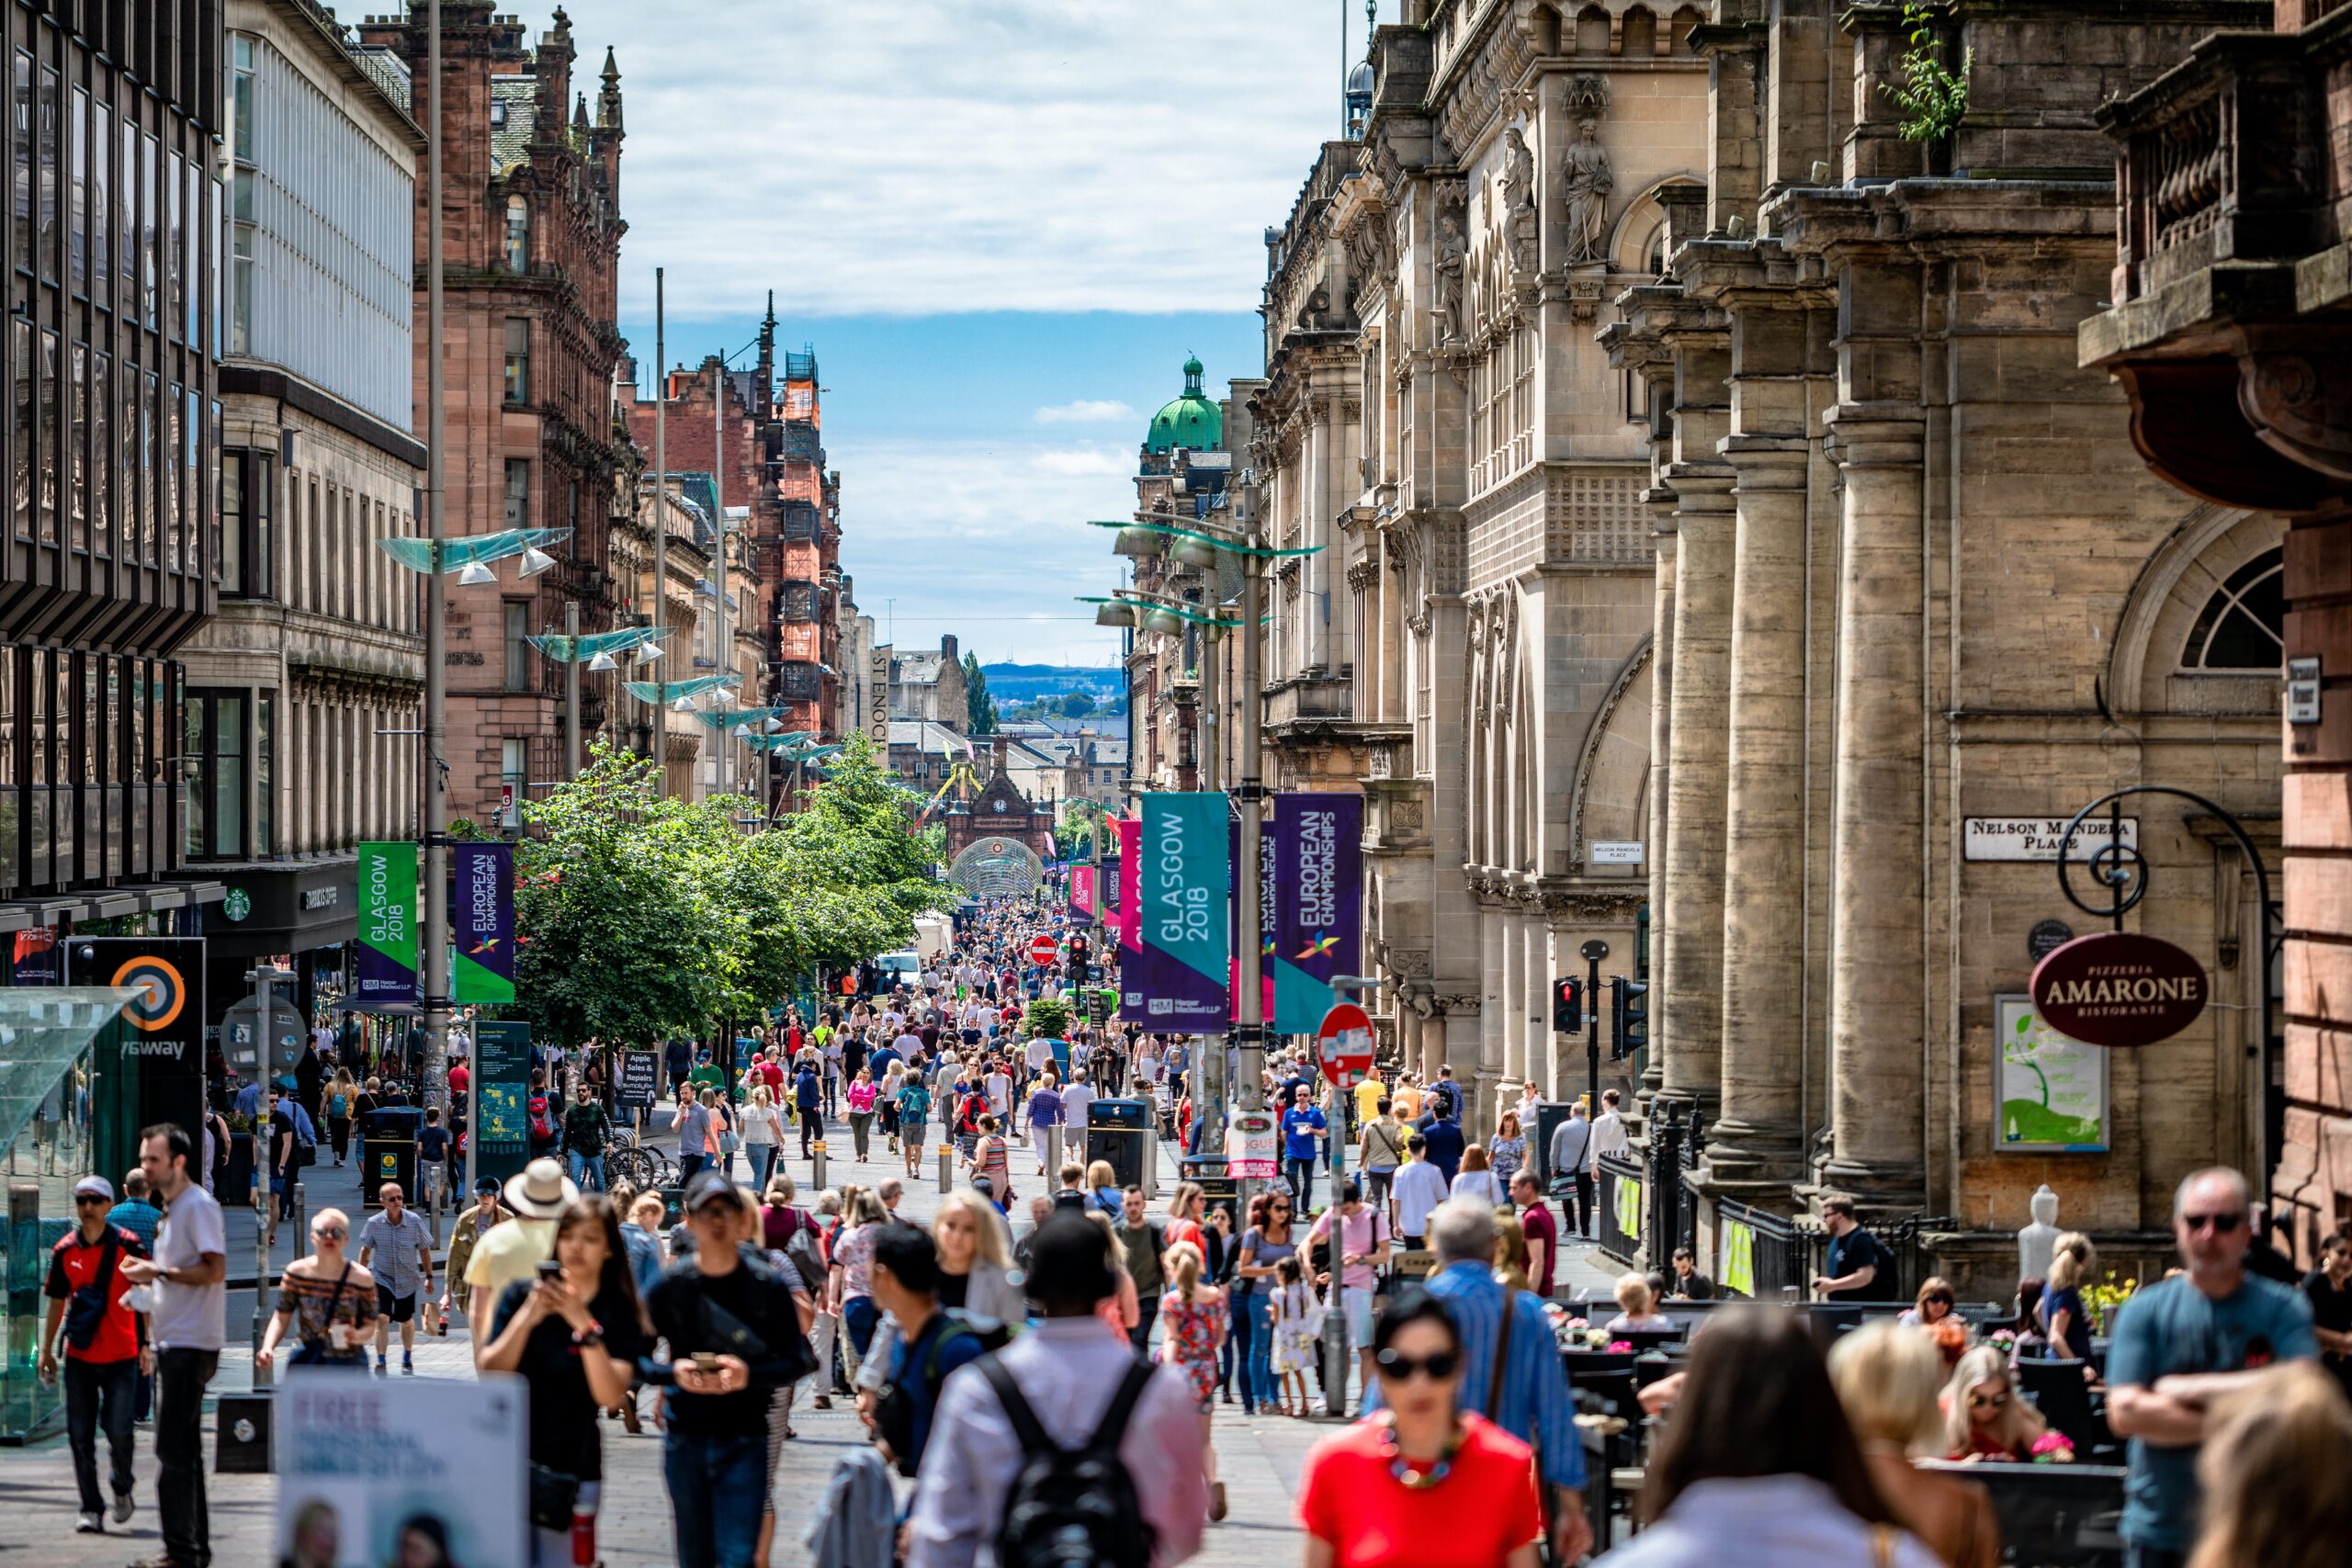 Glasgow (Photo Credit: Artur Kraft on Unsplash)